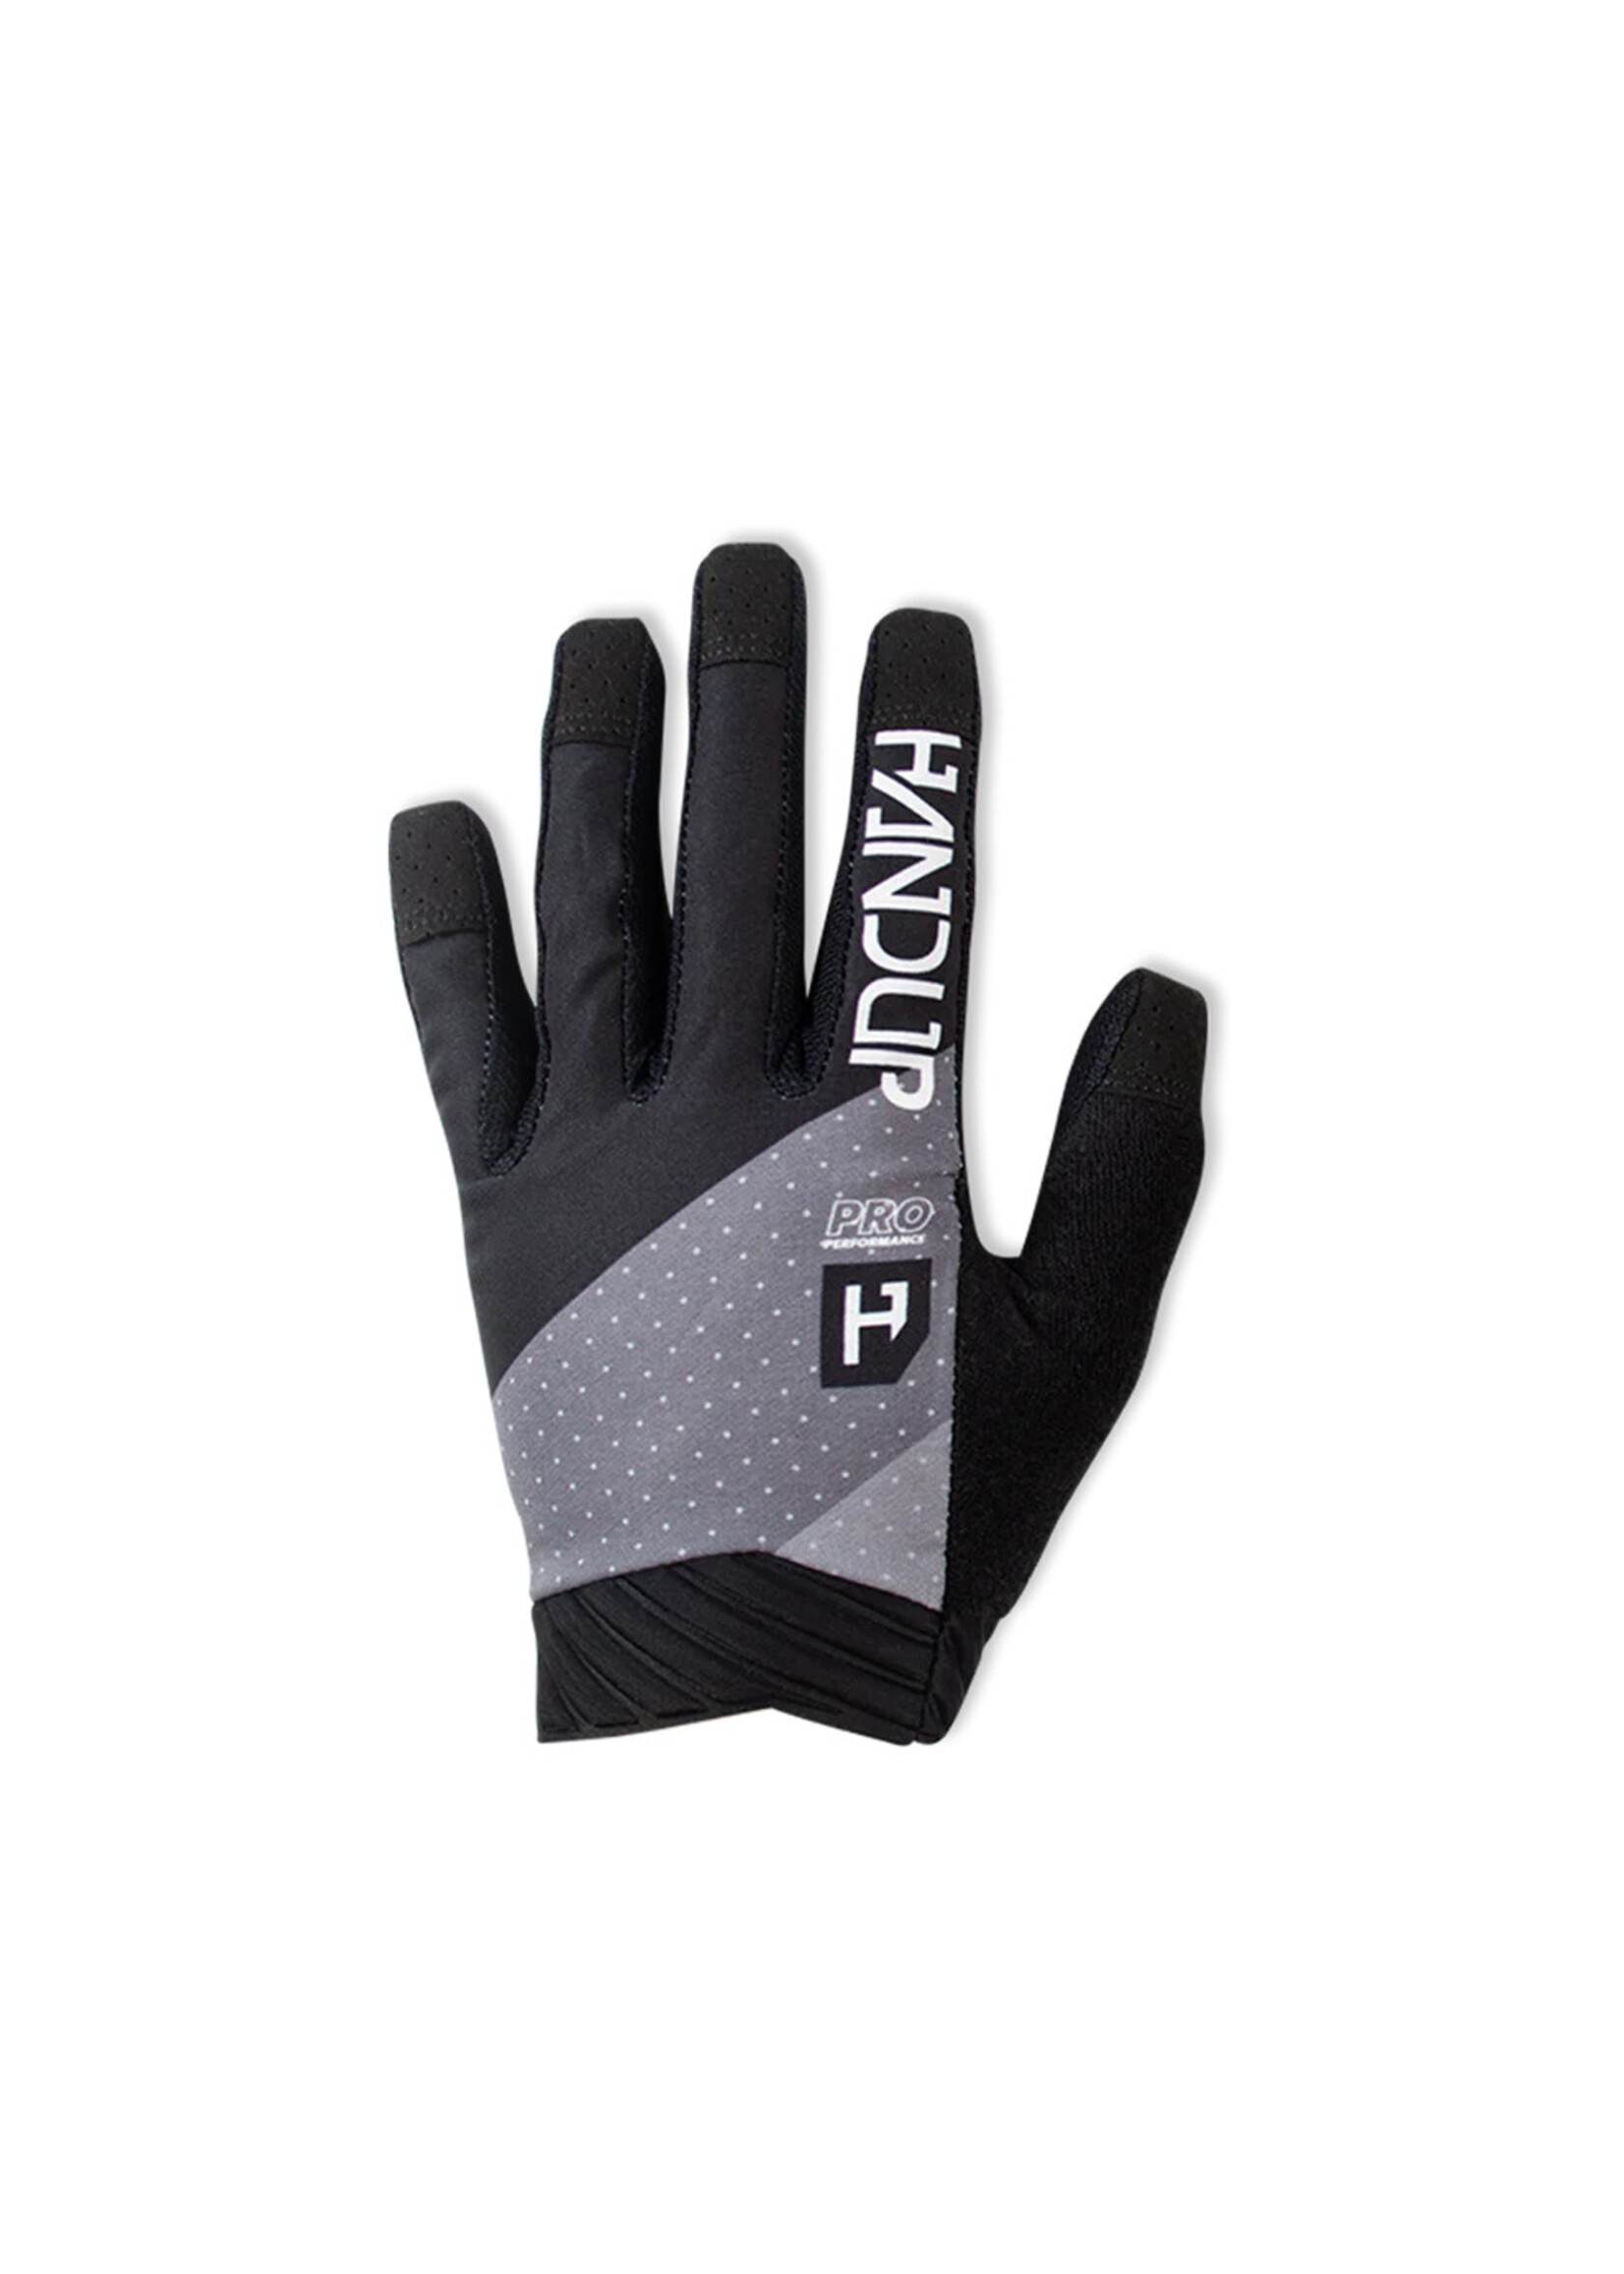 HandUp Pro Performance Gloves